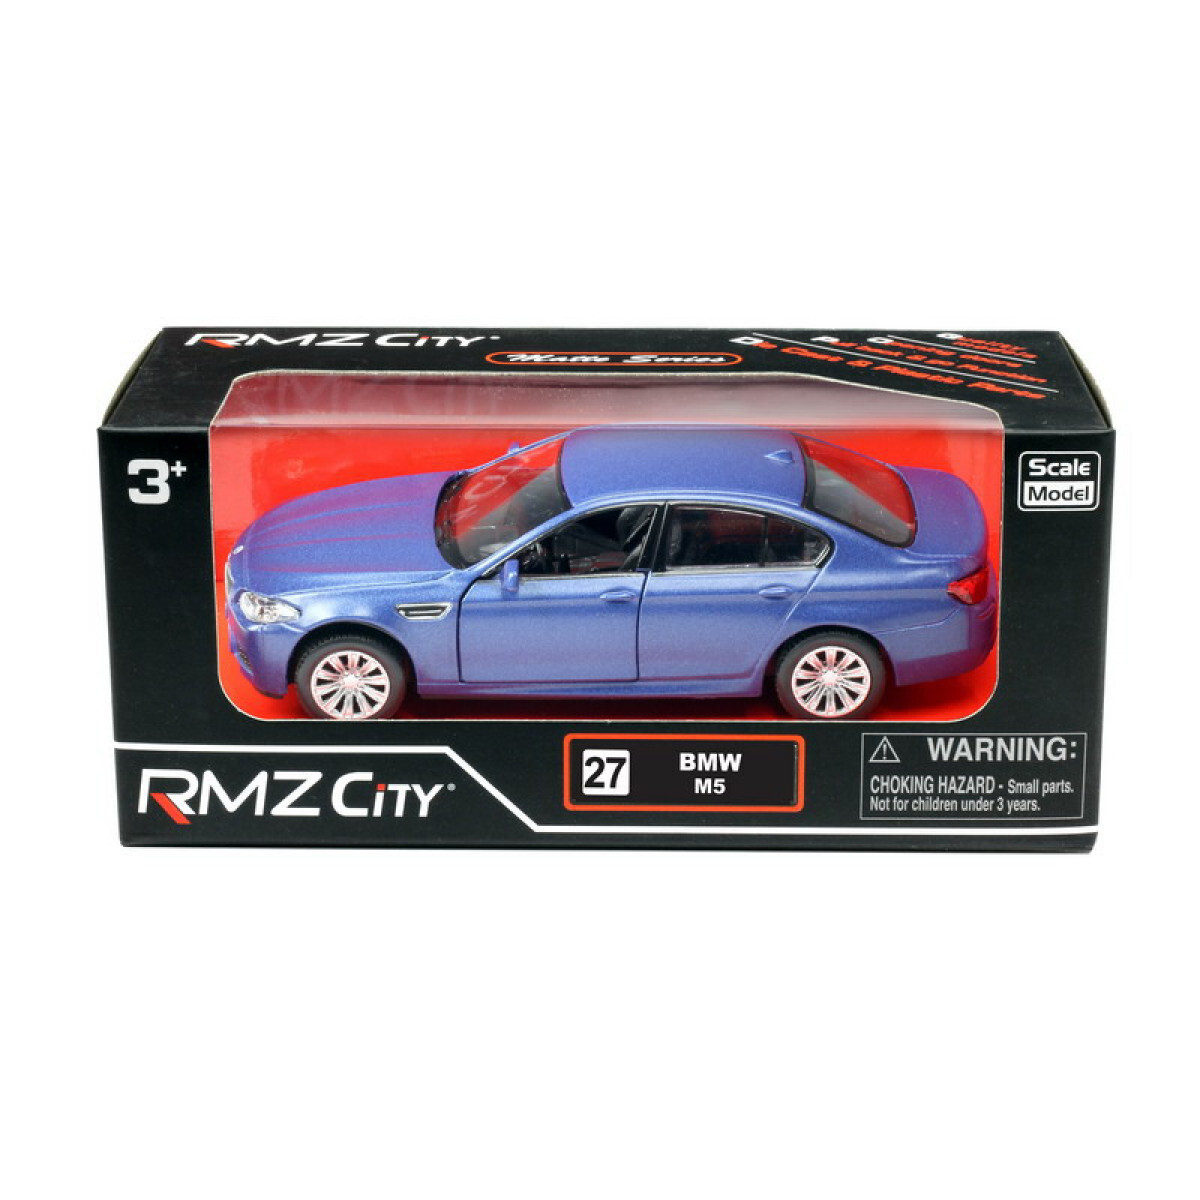 Rmz city. Легковой автомобиль RMZ City BMW m5 (554004m(a)) 1:32. RMZ City машинки BMW m5. 1:32 BMW m5 (RMZ City) 544004. RMZ City 1 32.